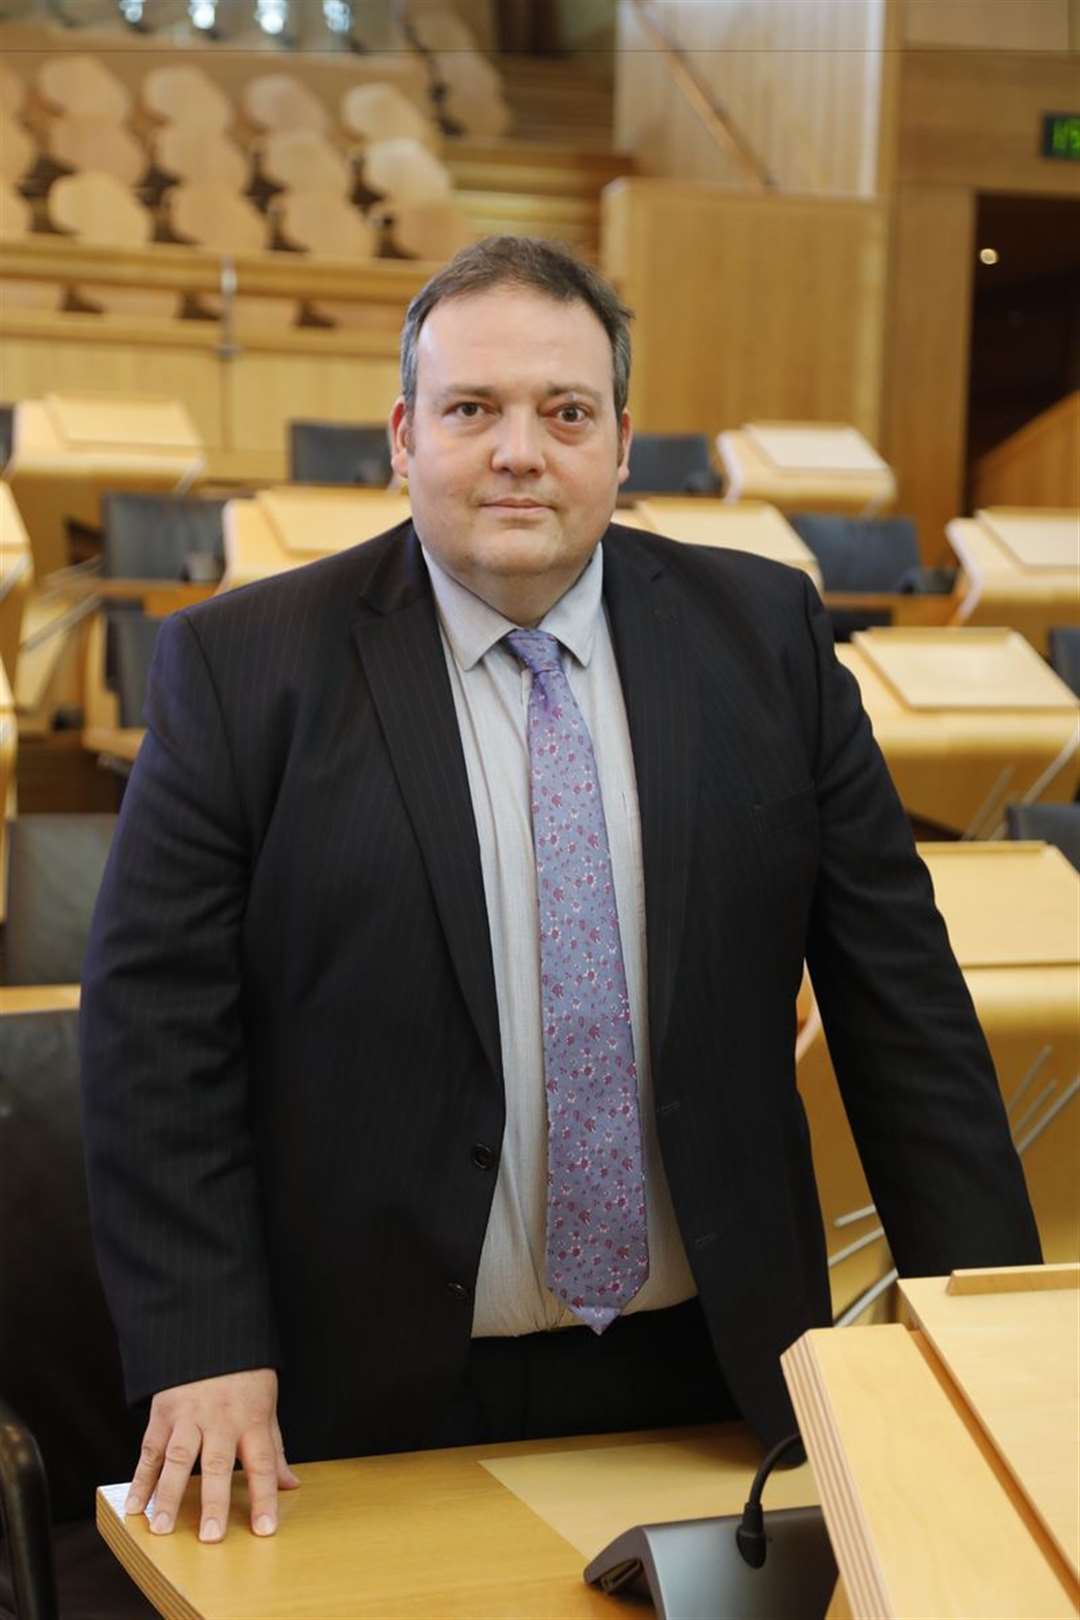 Jamie Halcro Johnston MSP 26 June 2019. Pic - Andrew Cowan/Scottish Parliament